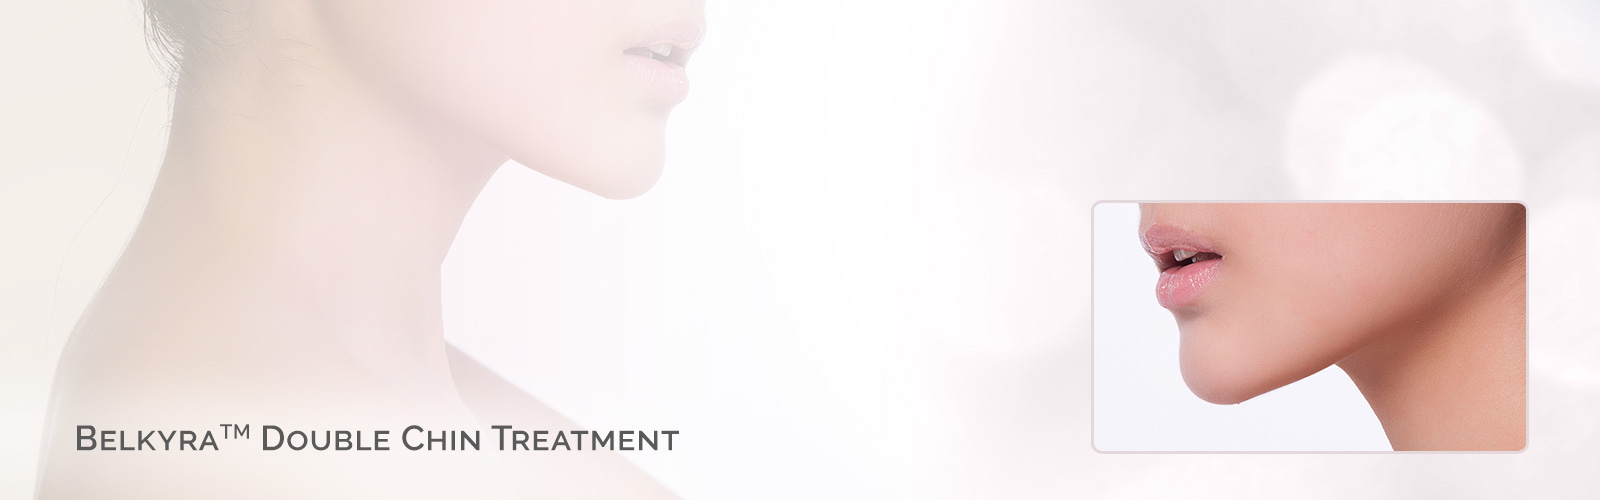 Belkyra™ Double Chin Treatment